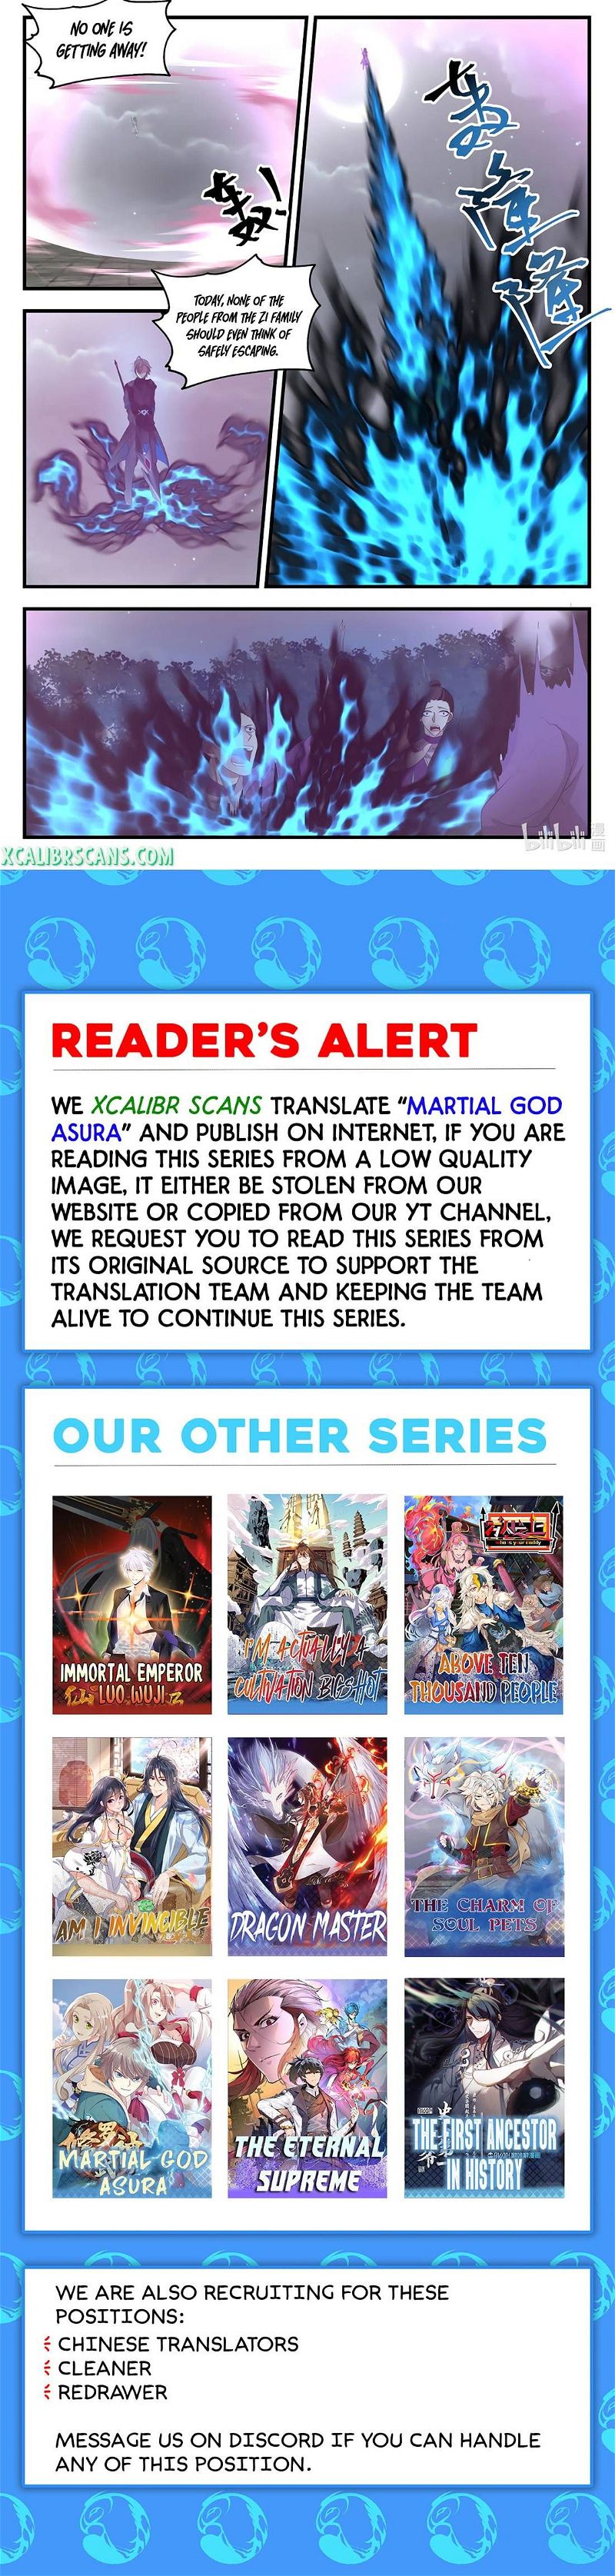 Martial God Asura Chapter 539 page 10